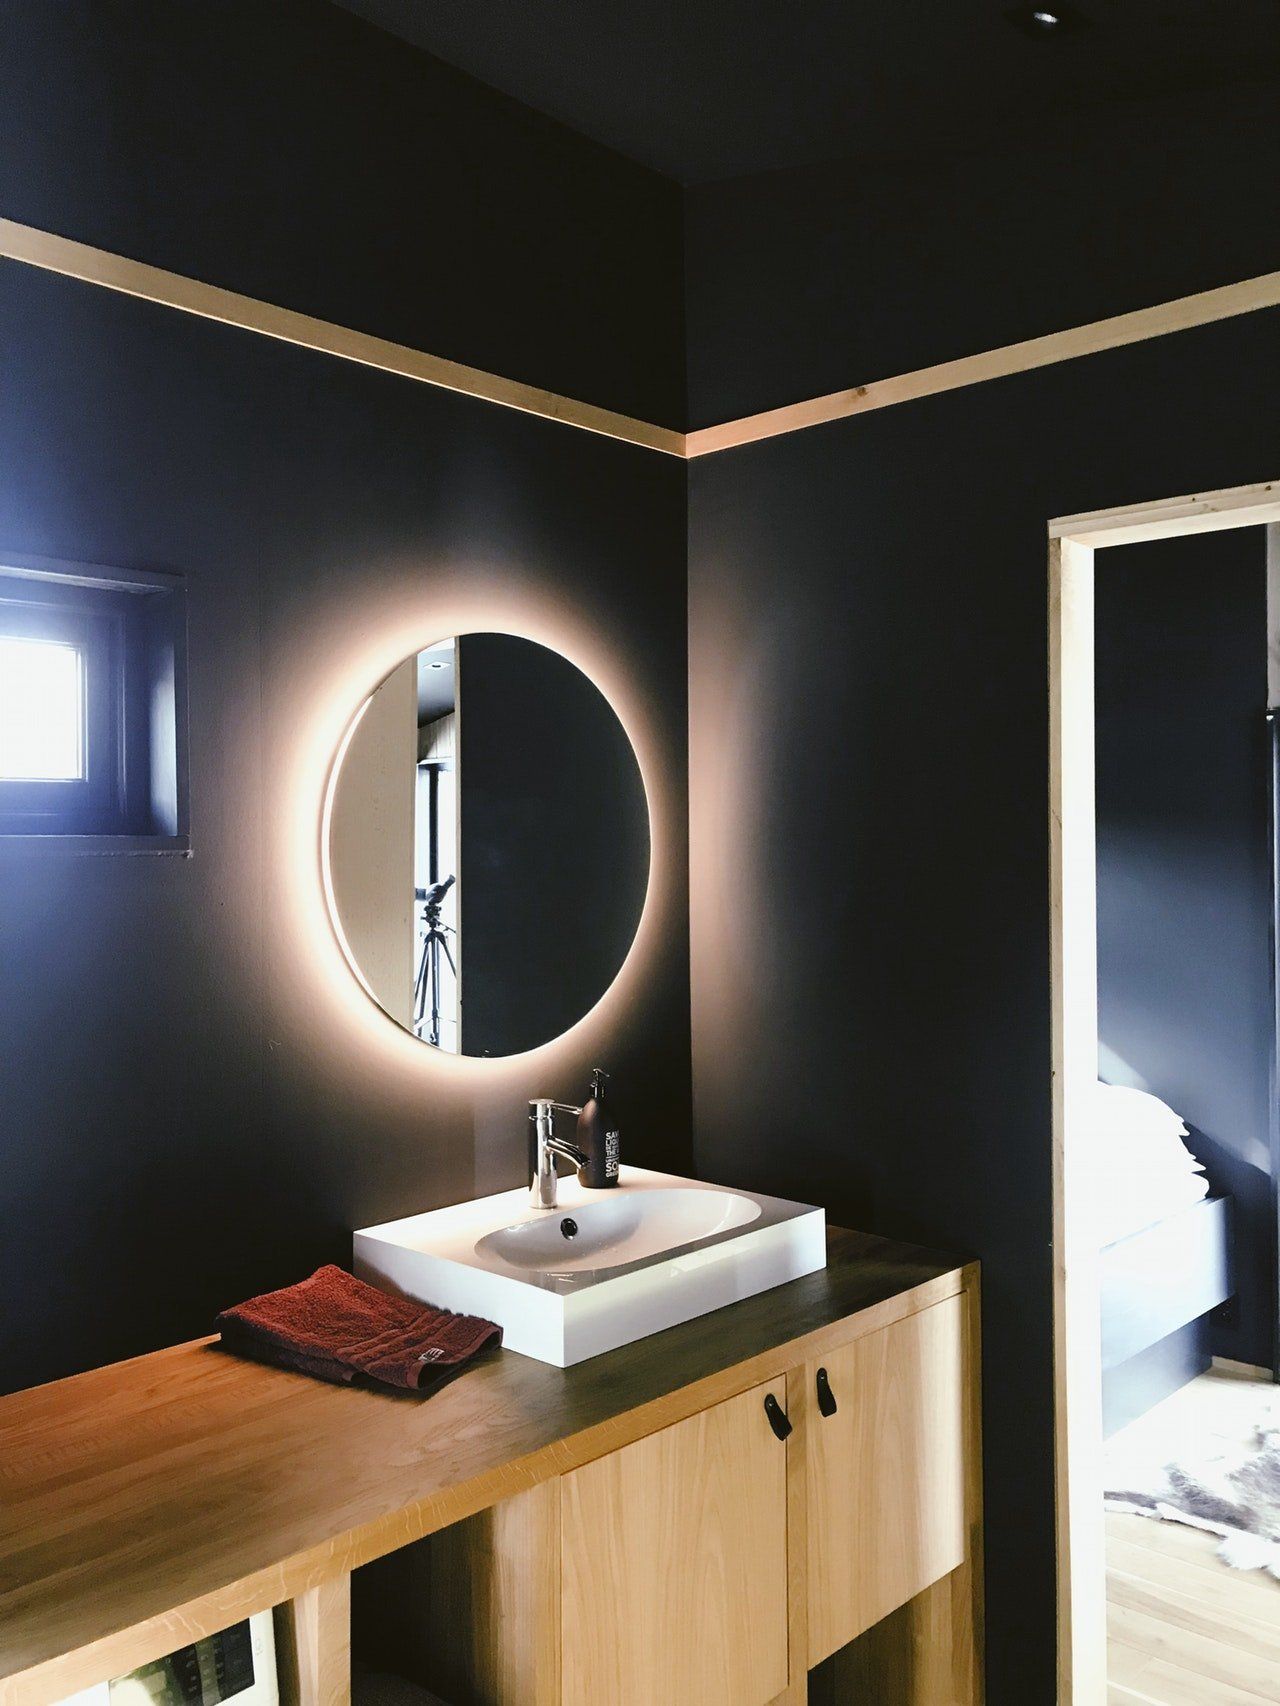 Spa-like bathroom with black walls and circle mirror